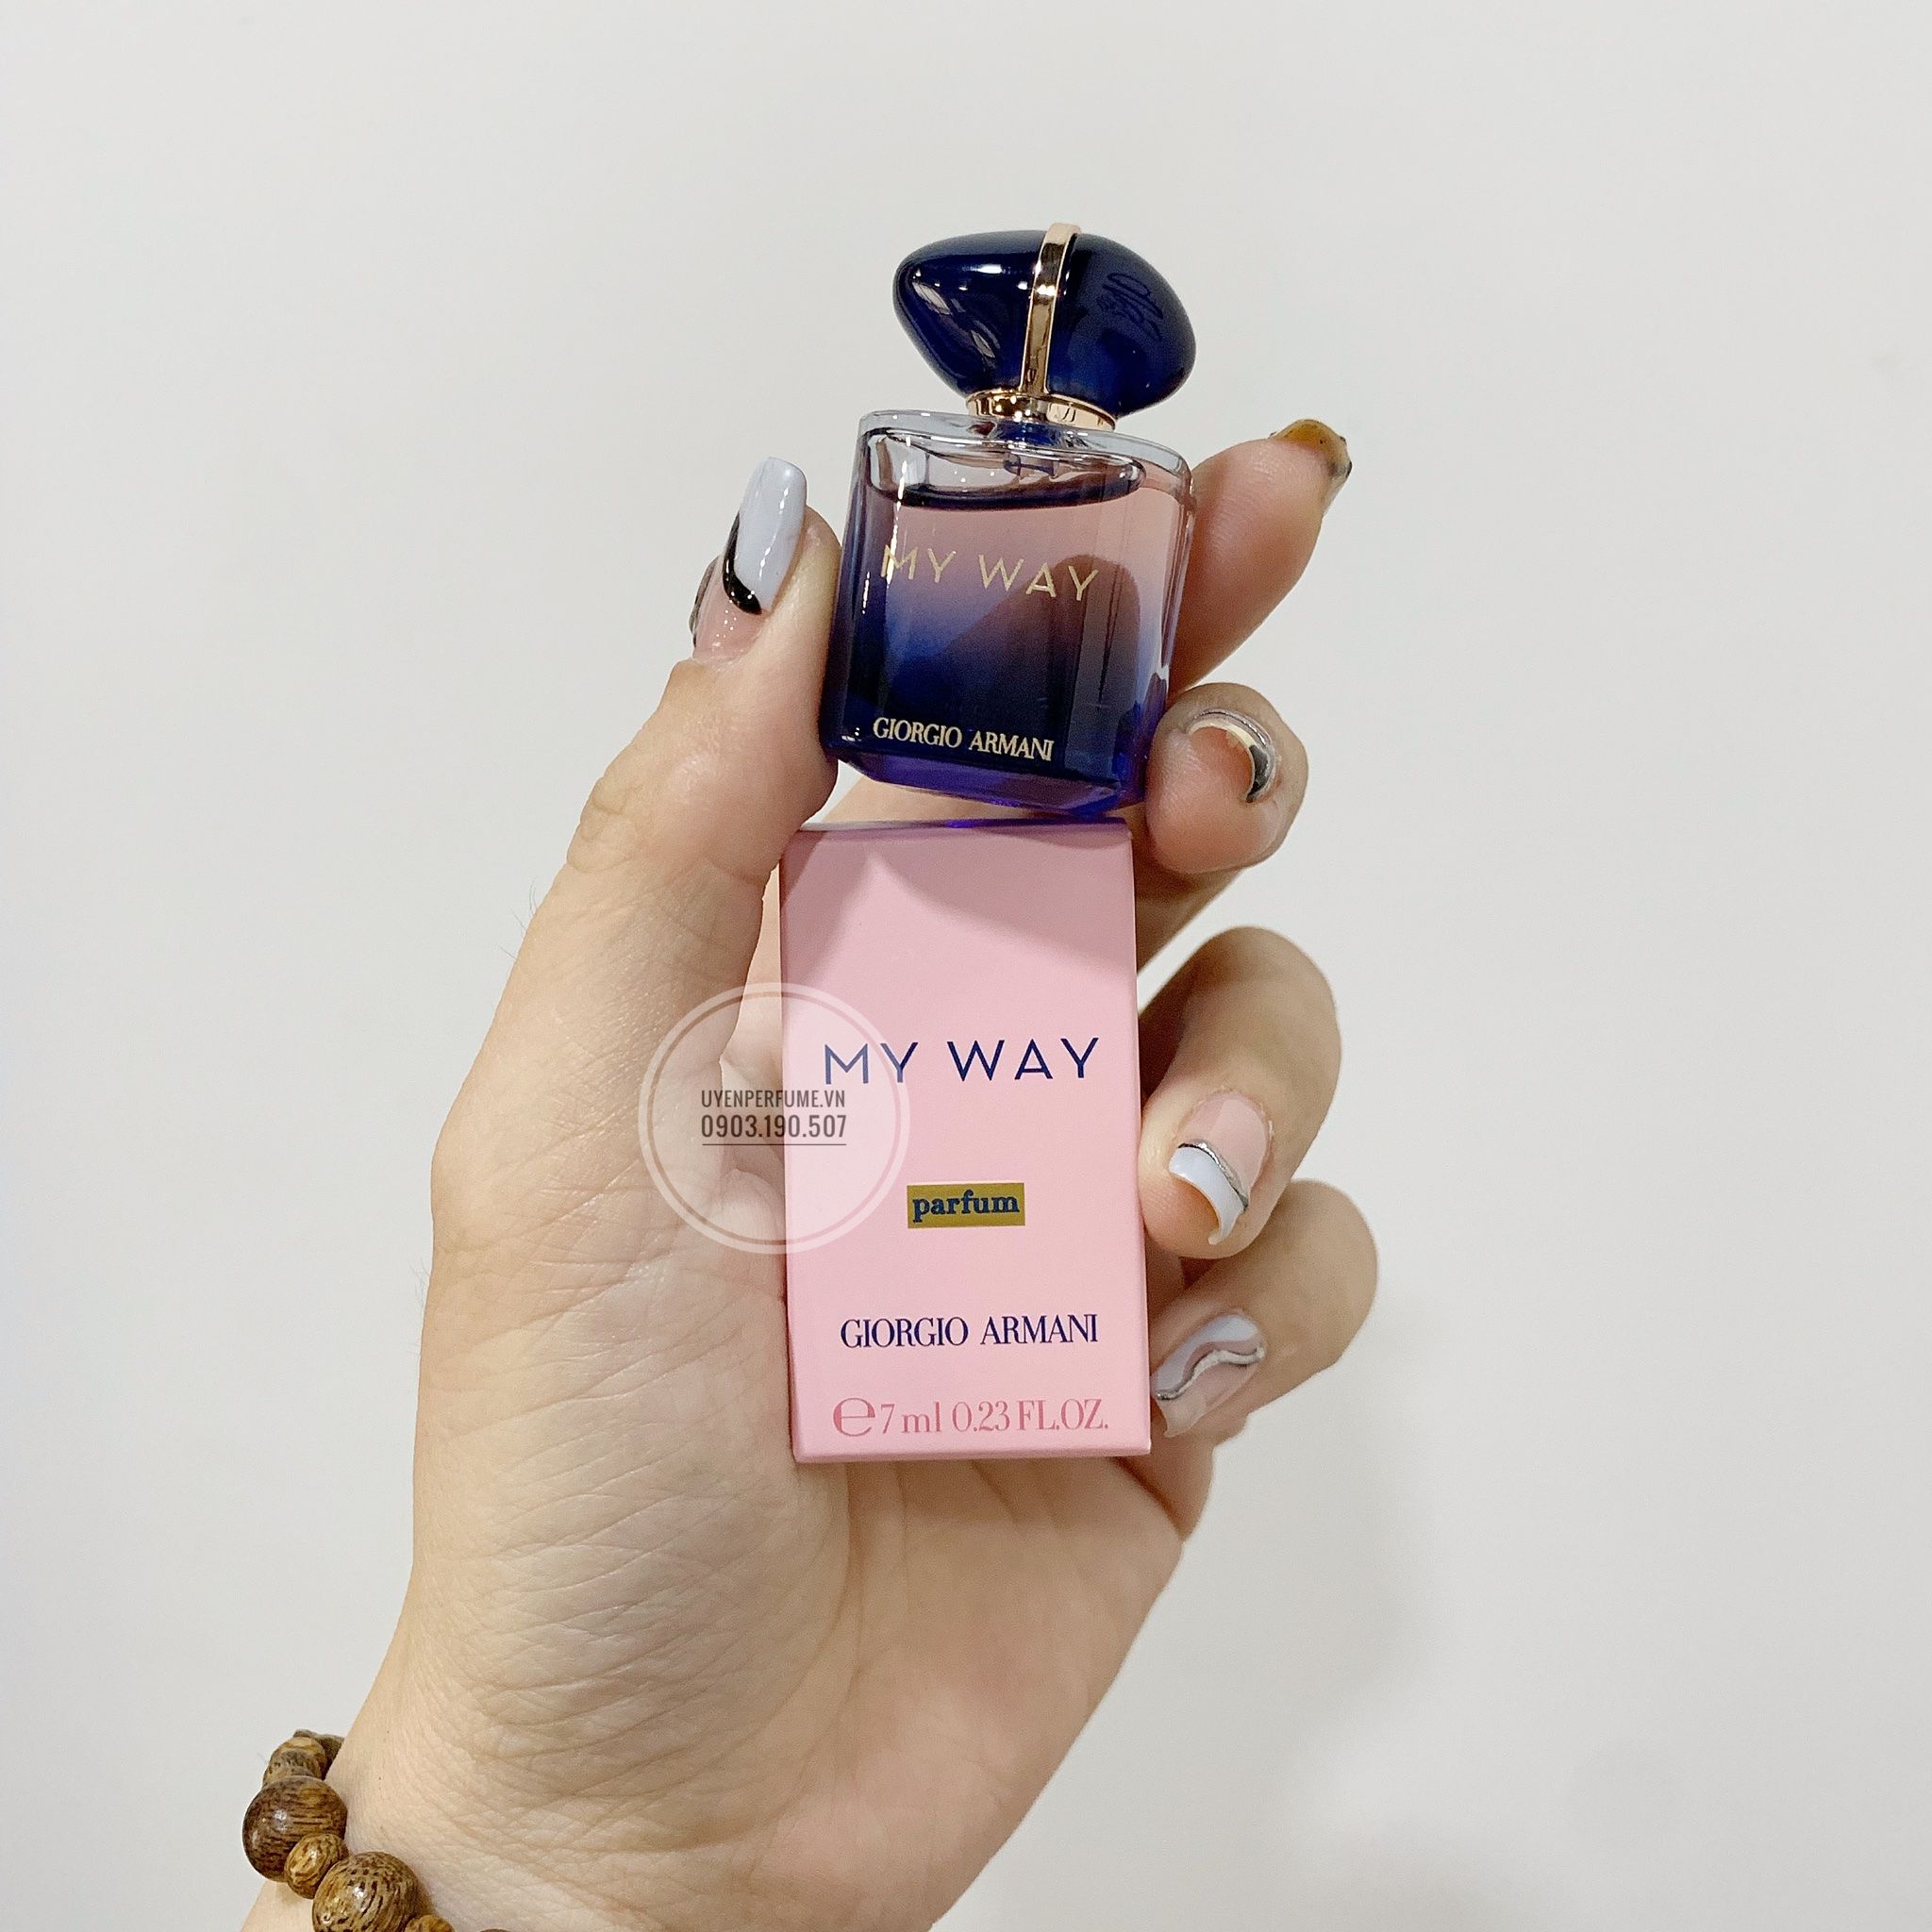  My Way Parfum 7ml 